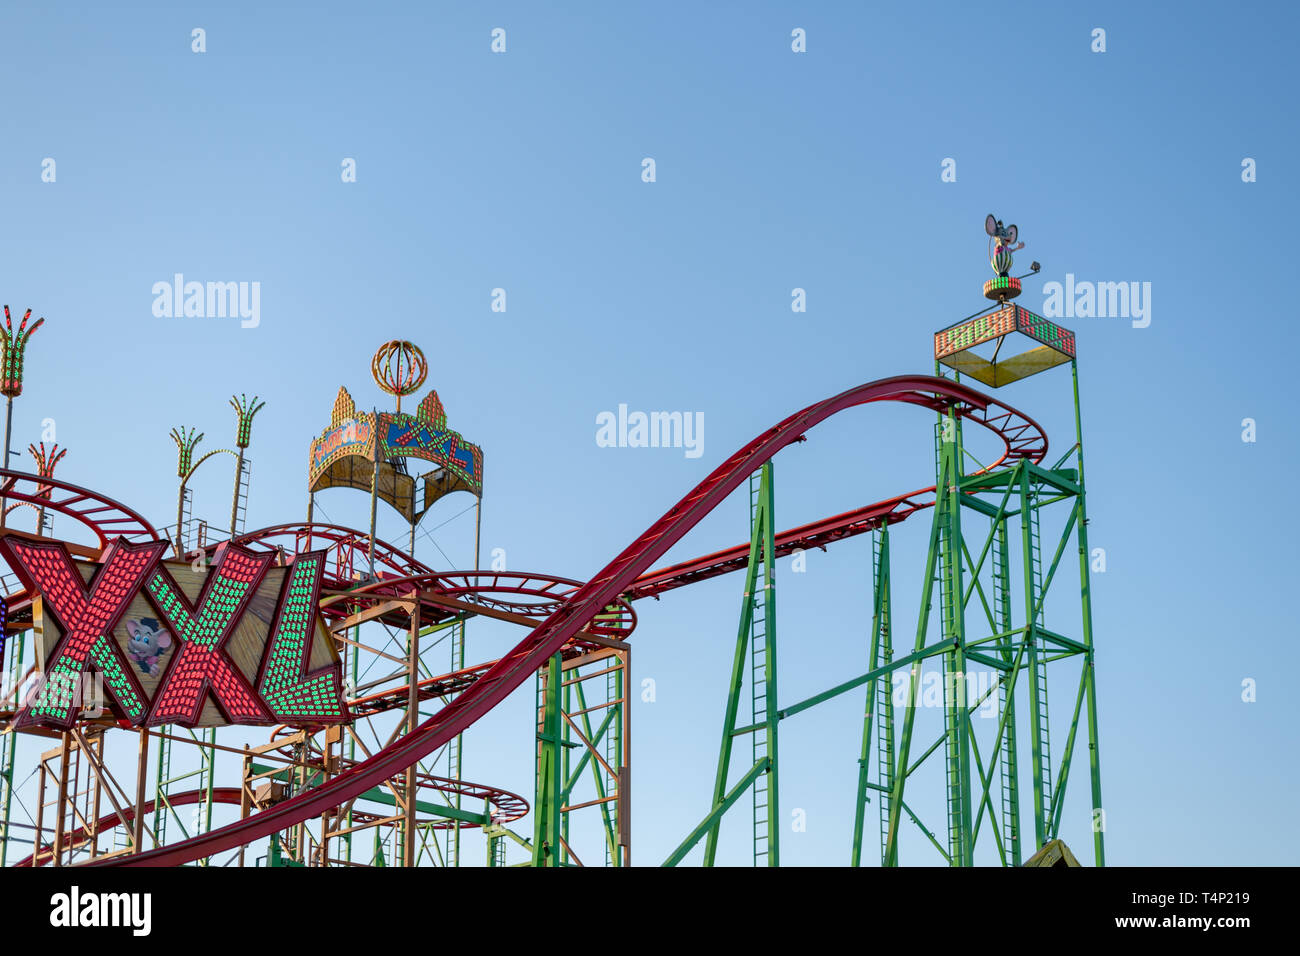 hamburg, Germany - Roller coaster in the Hamburger amusement park DOM Stock Photo